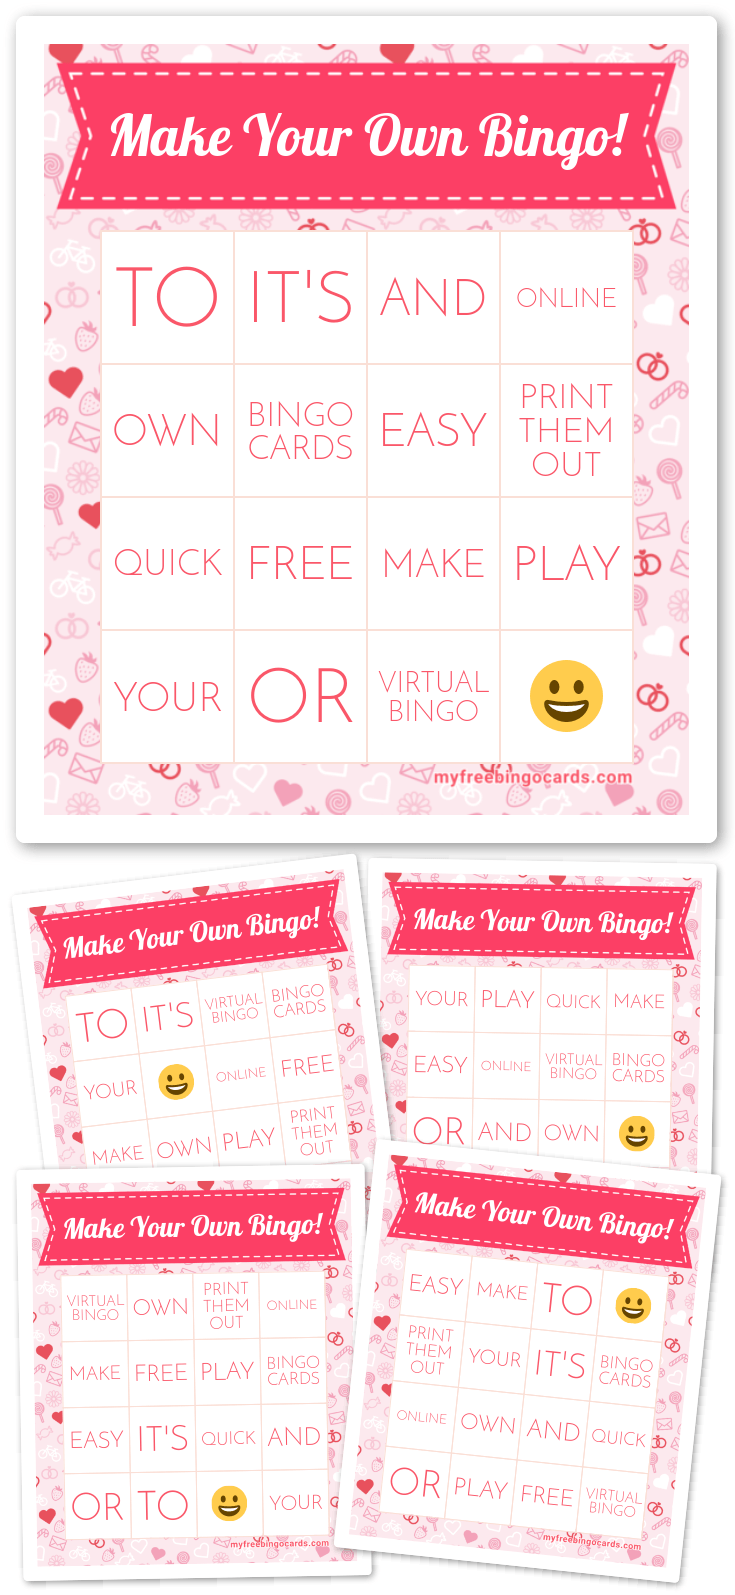 Virtual Make Your Own Bingo!